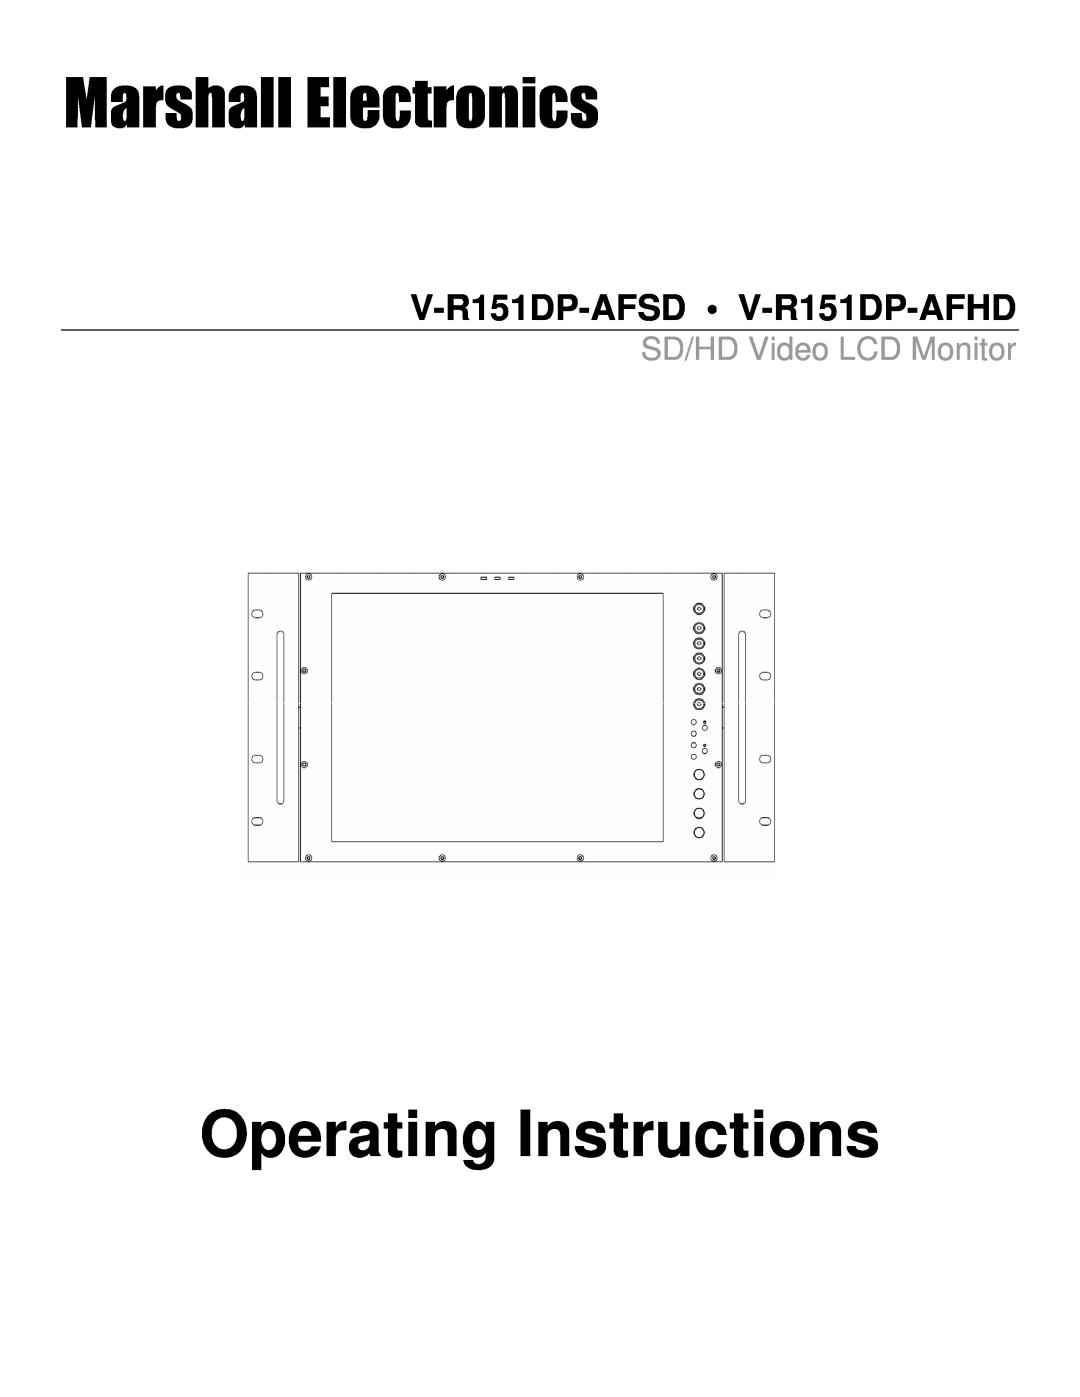 Marshall electronic manual Marshall Electronics, Operating Instructions, V-R151DP-AFSD V-R151DP-AFHD 